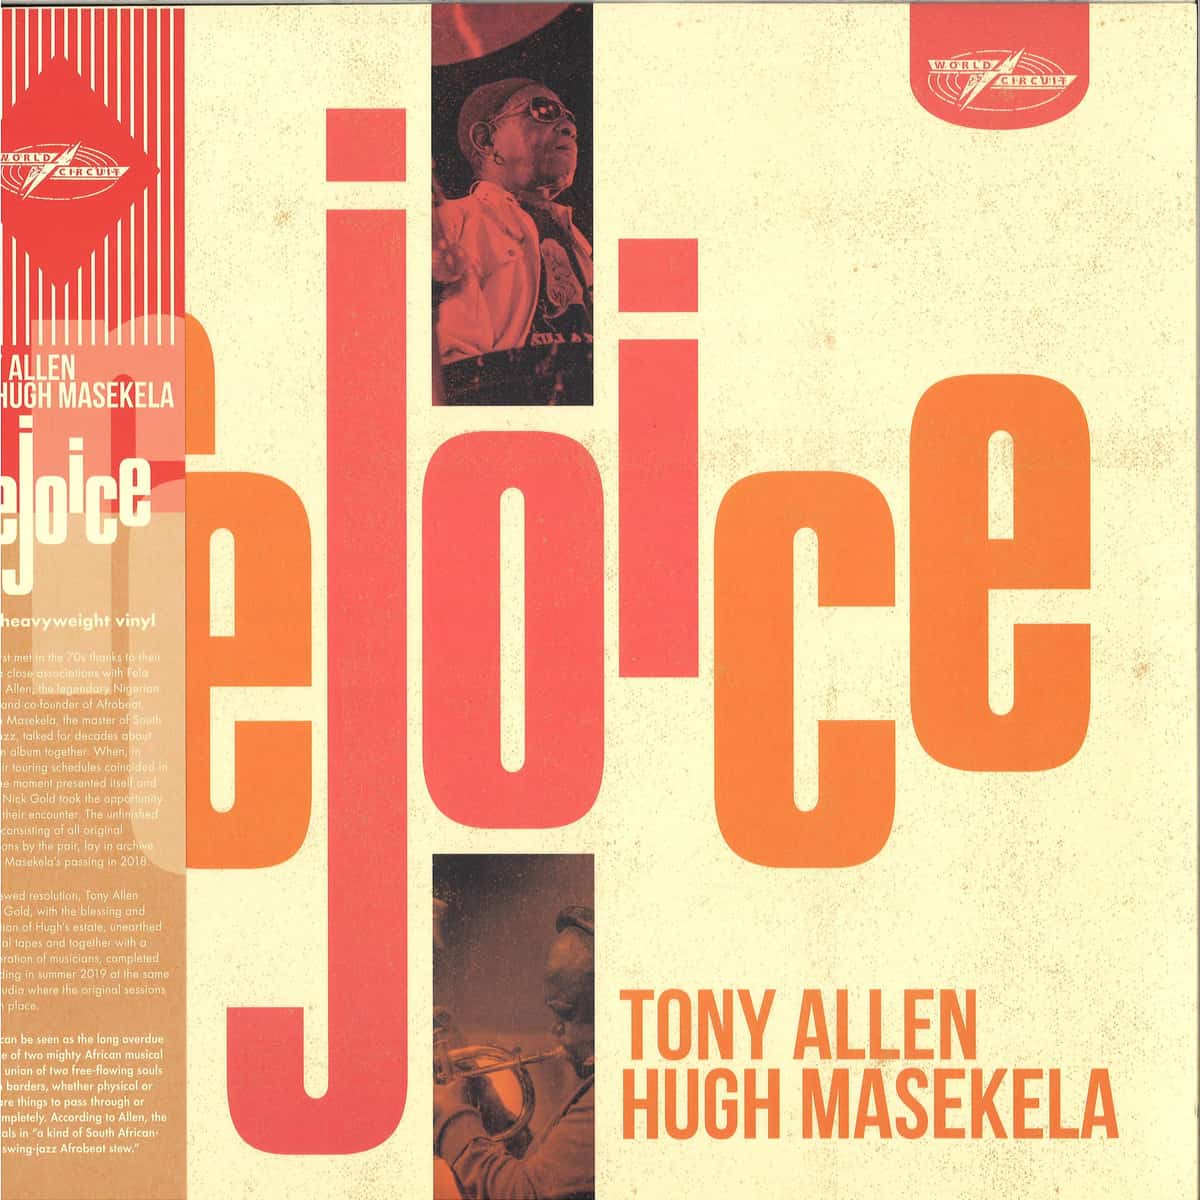 TONY ALLEN AND HUGH MASEKELA - REJOICE